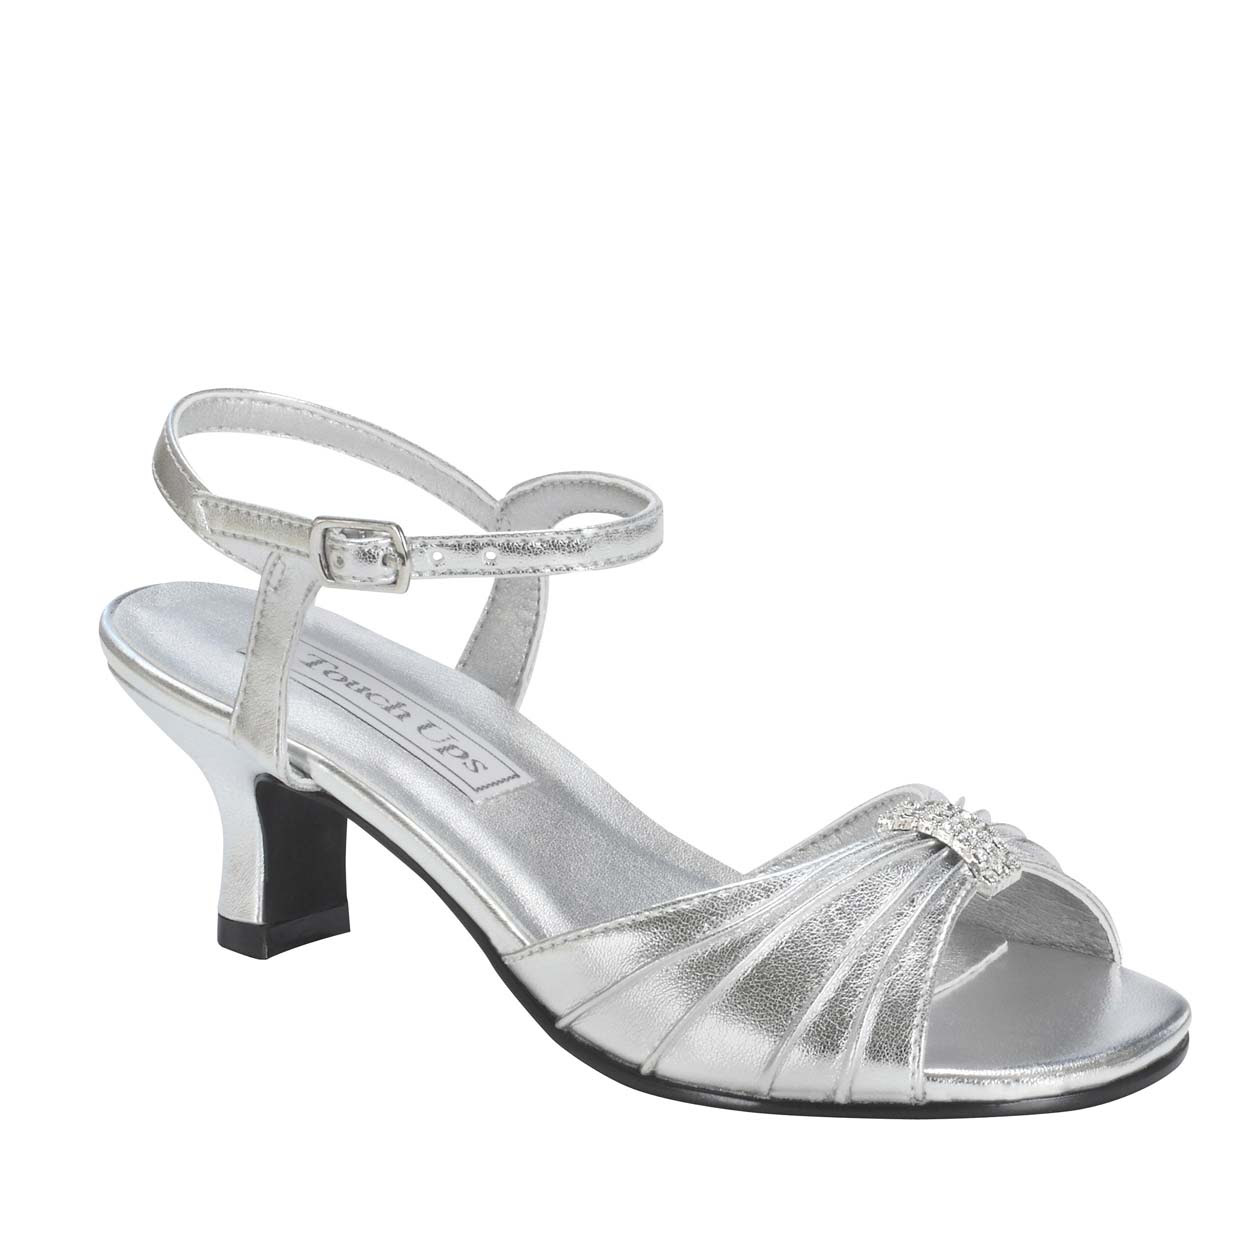 Comfortable Silver Dress Shoes For Wedding - Foto Kolekcija